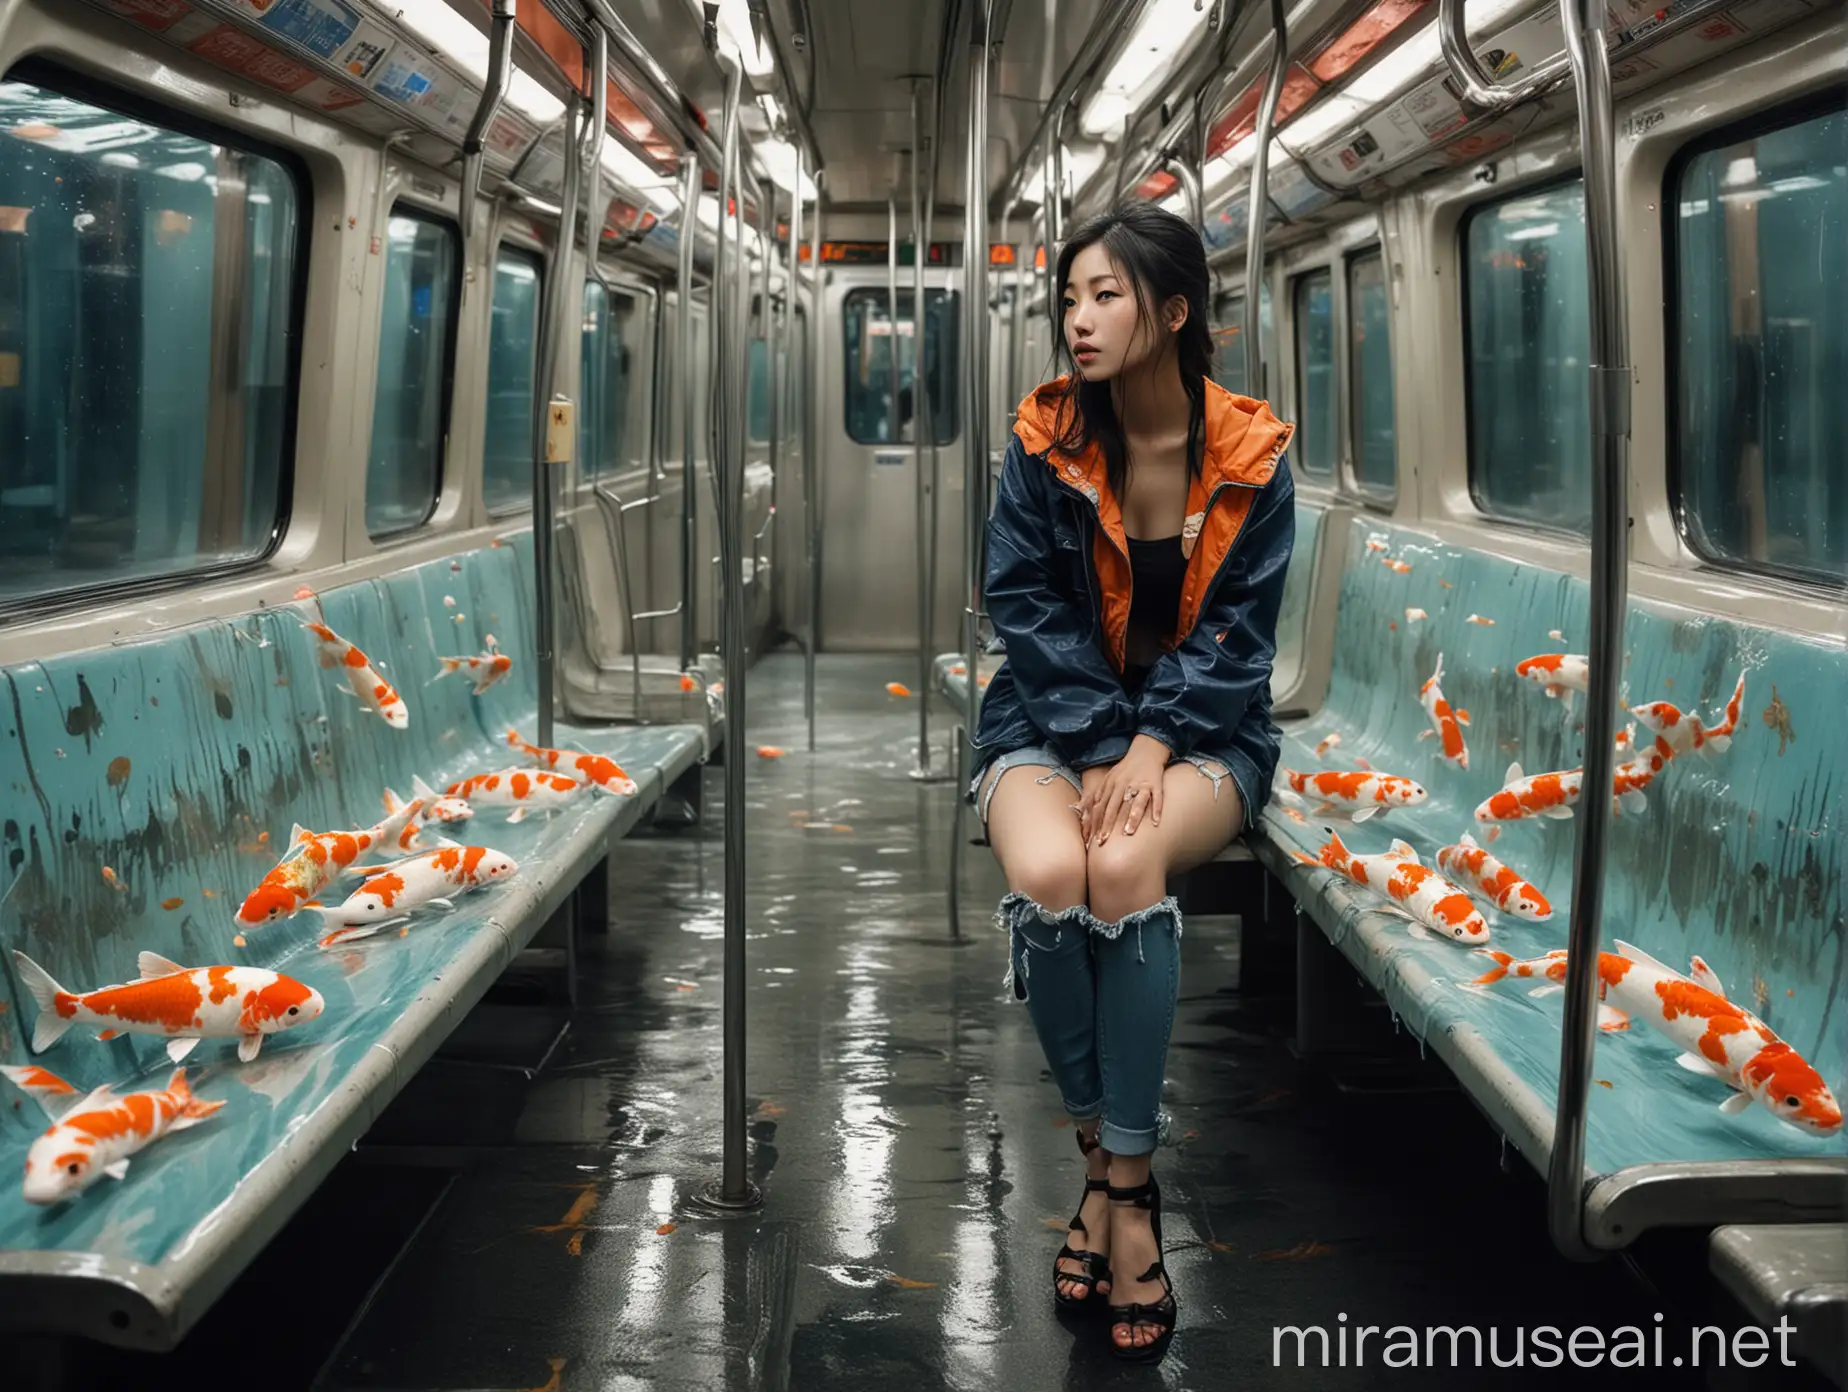 Surreal Urban Underwater Scene Korean Woman and Koi Fish in Flooded Metro Train